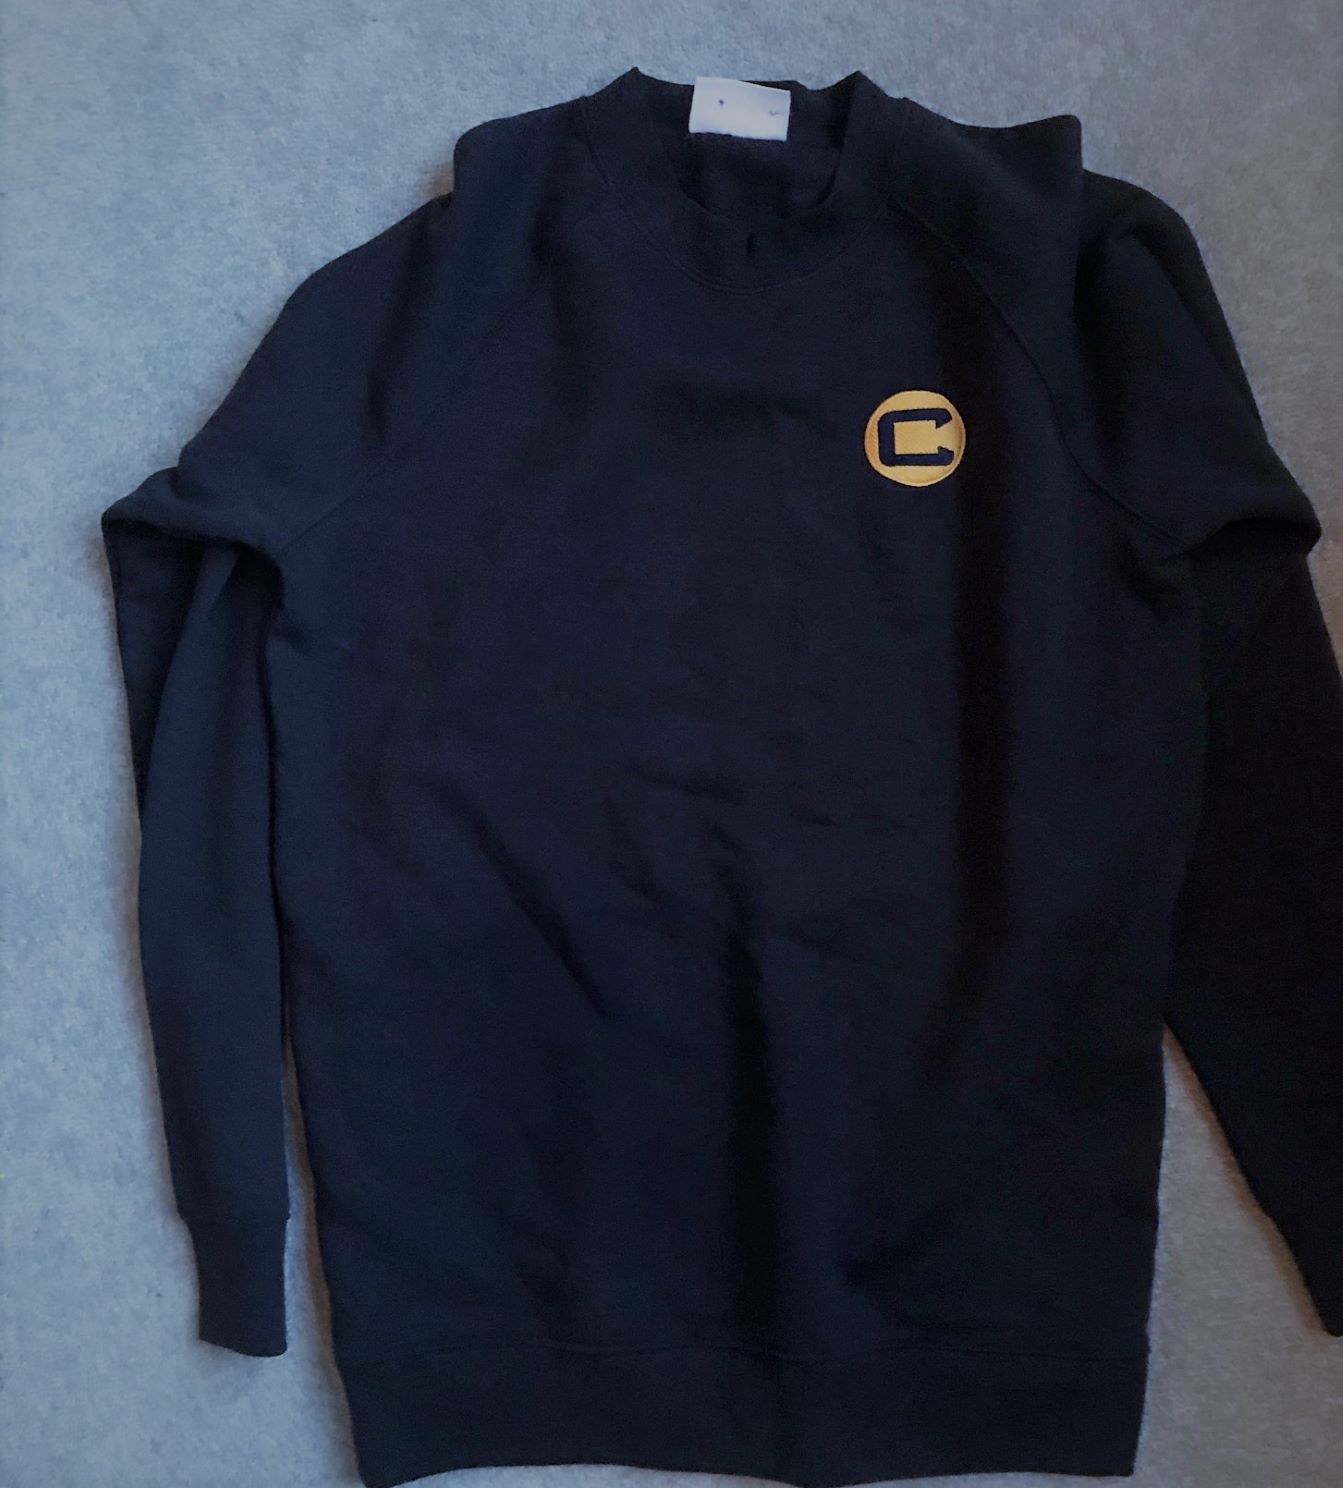 Charter North PE Jumper/ Sweatshirt size Small